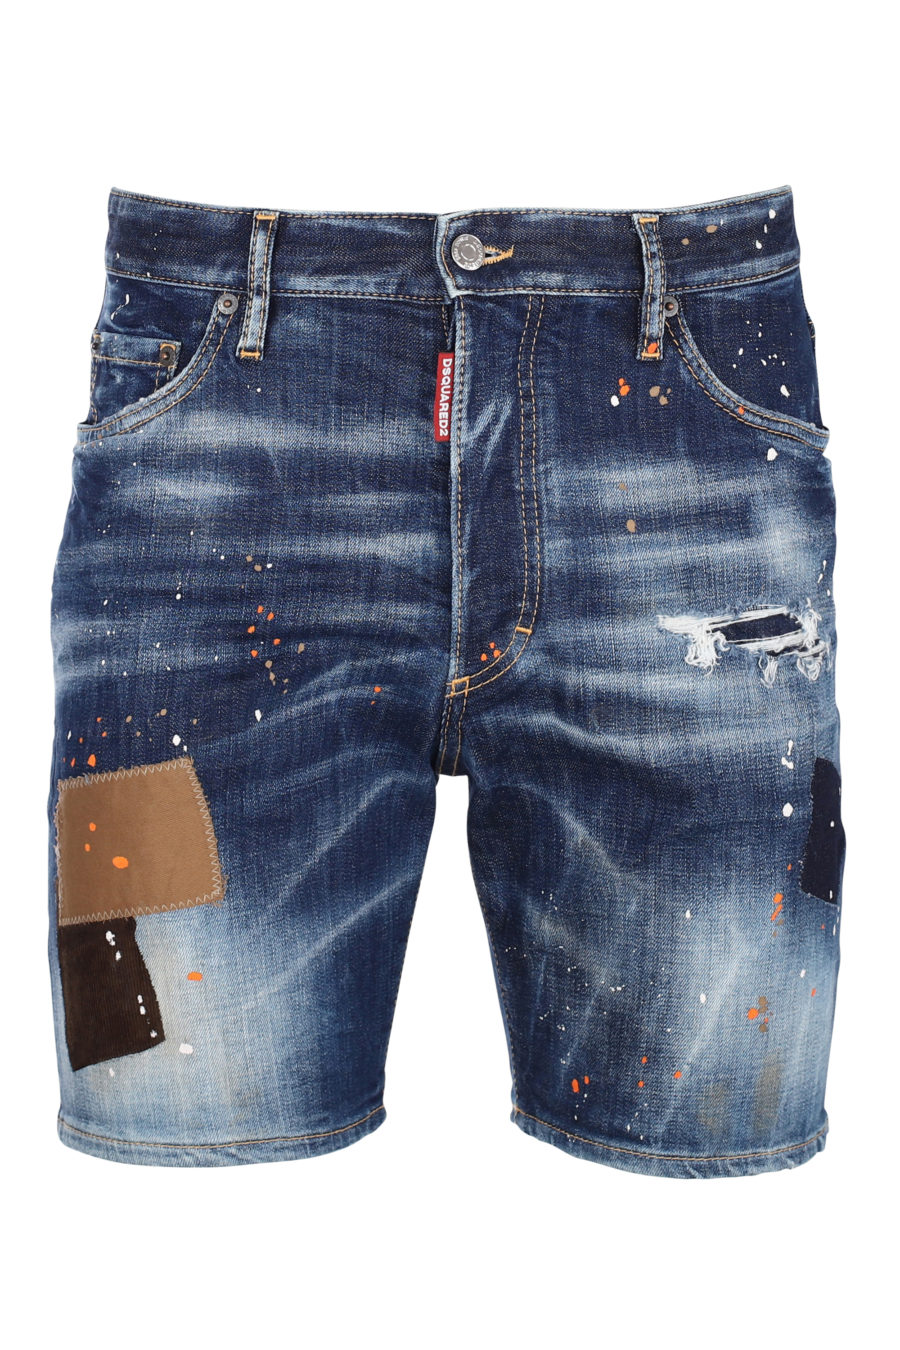 Pantalon corto "patch marine" azul con parches marron - IMG 9800